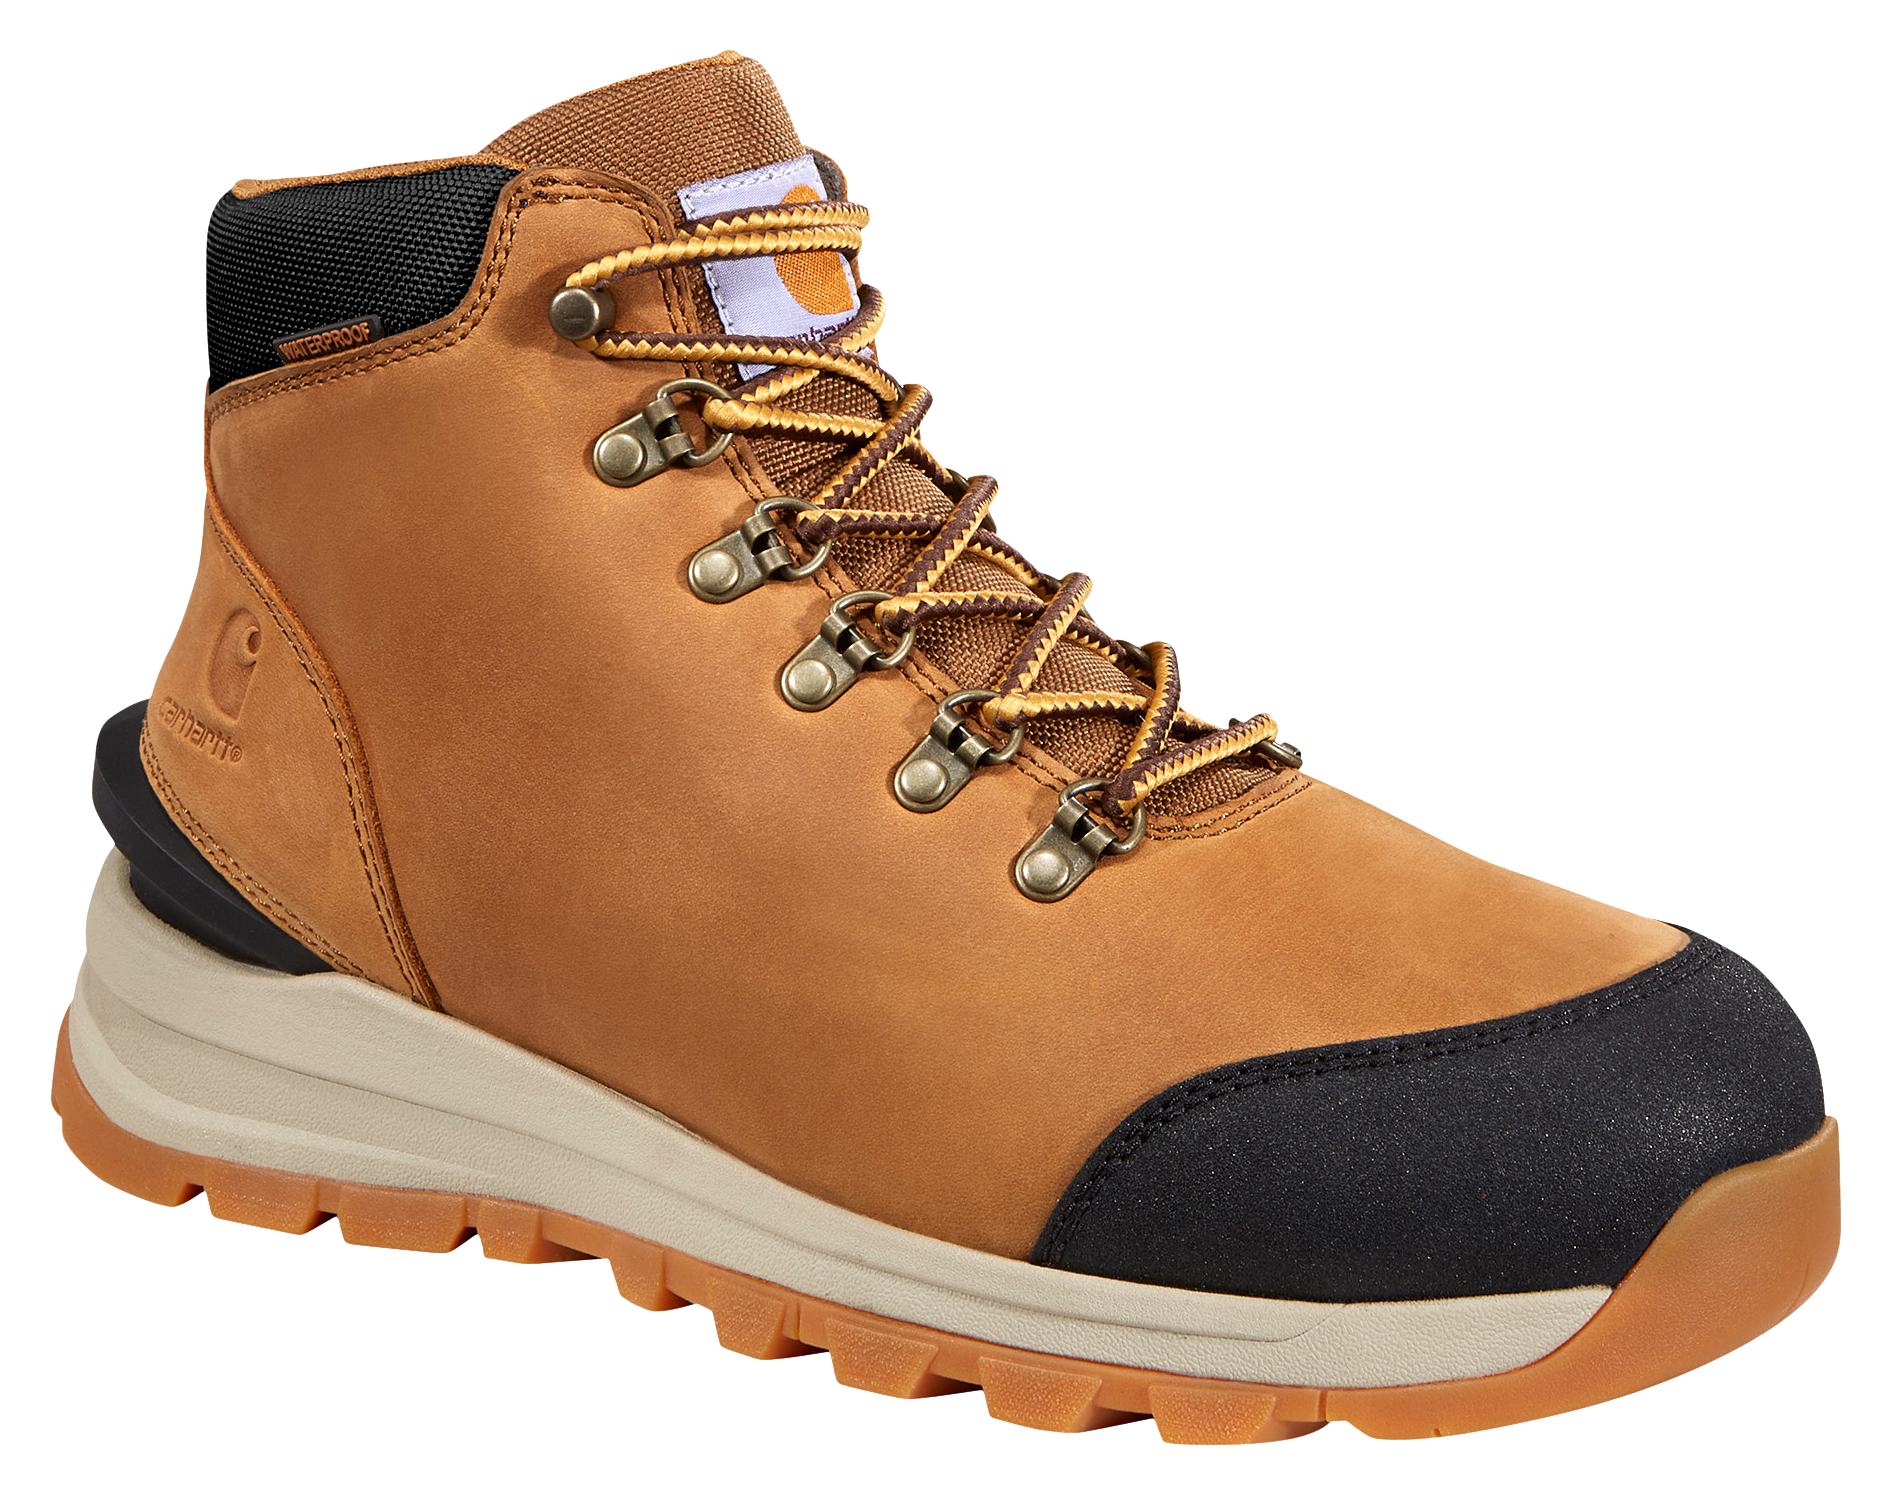 Carhartt Gilmore Waterproof Hiking Boots for Men - Brown - 12W